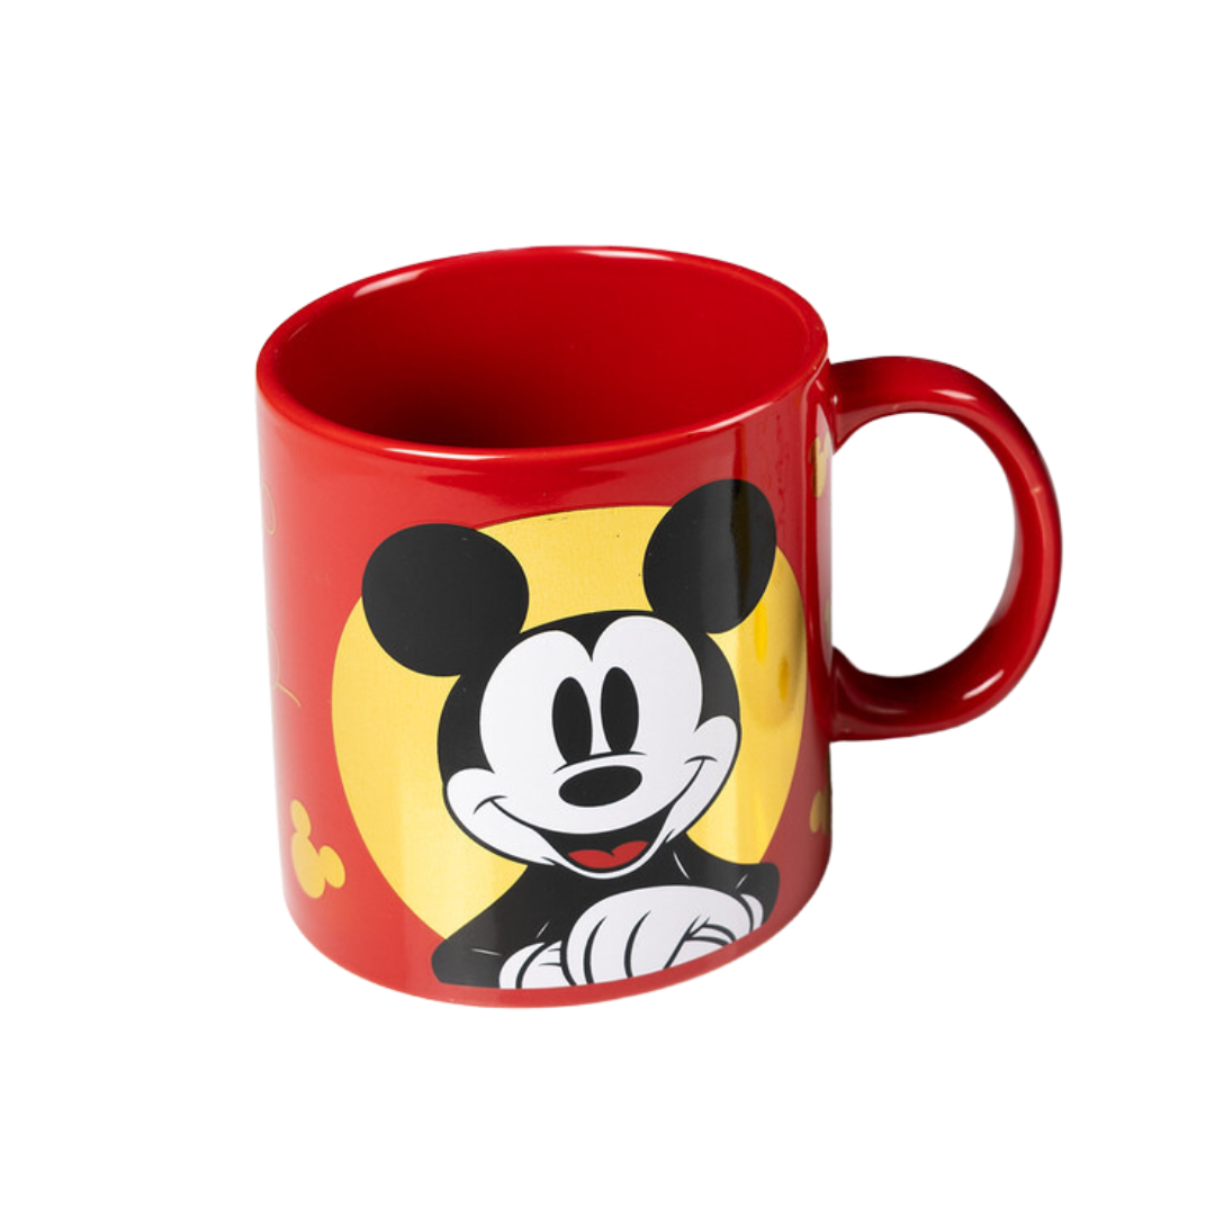 Mickey Mouse Jumbo Mug with Hot Cocoa Mix - 4ct